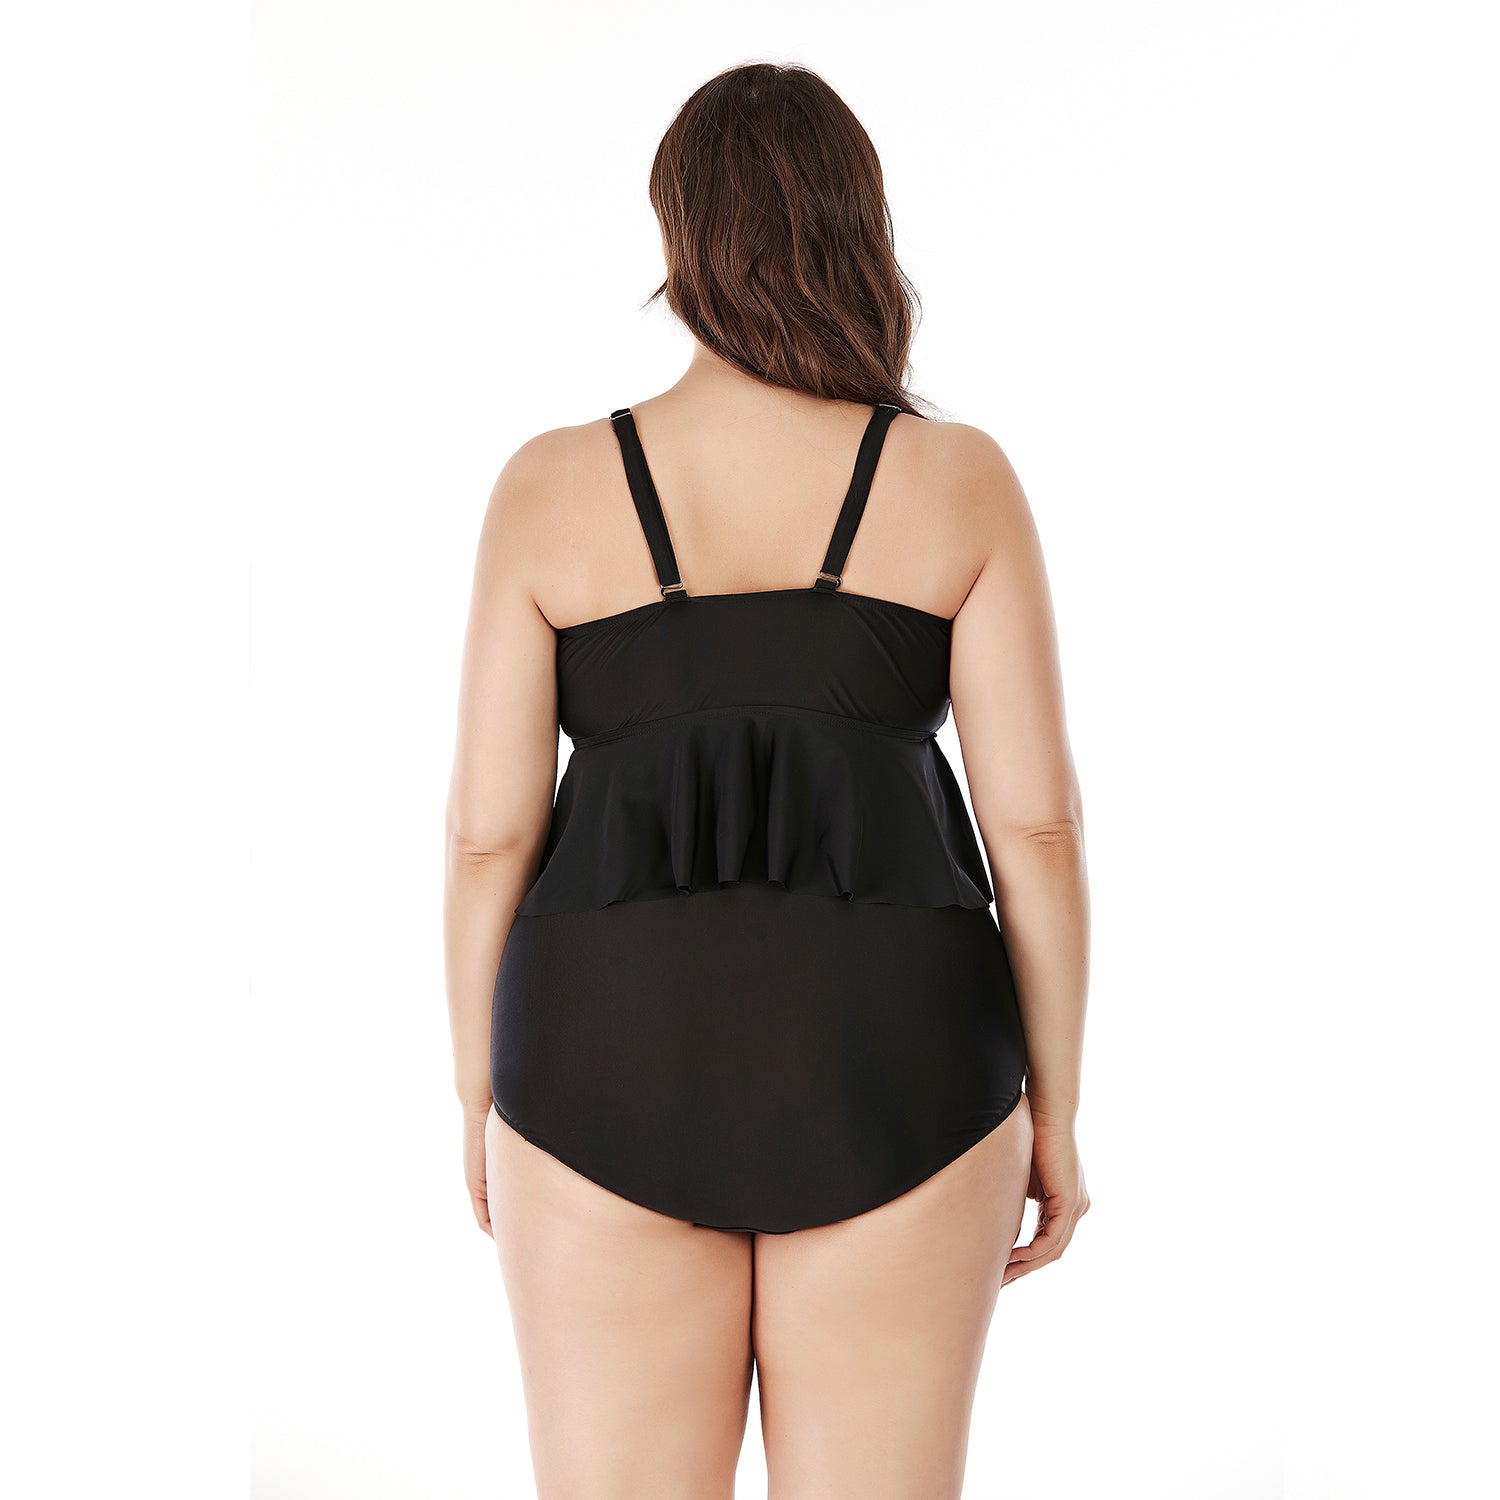 SiySiy Women's Plus Size Two Piece Swimsuit Women's Ruffle Plain Black Swimsuit